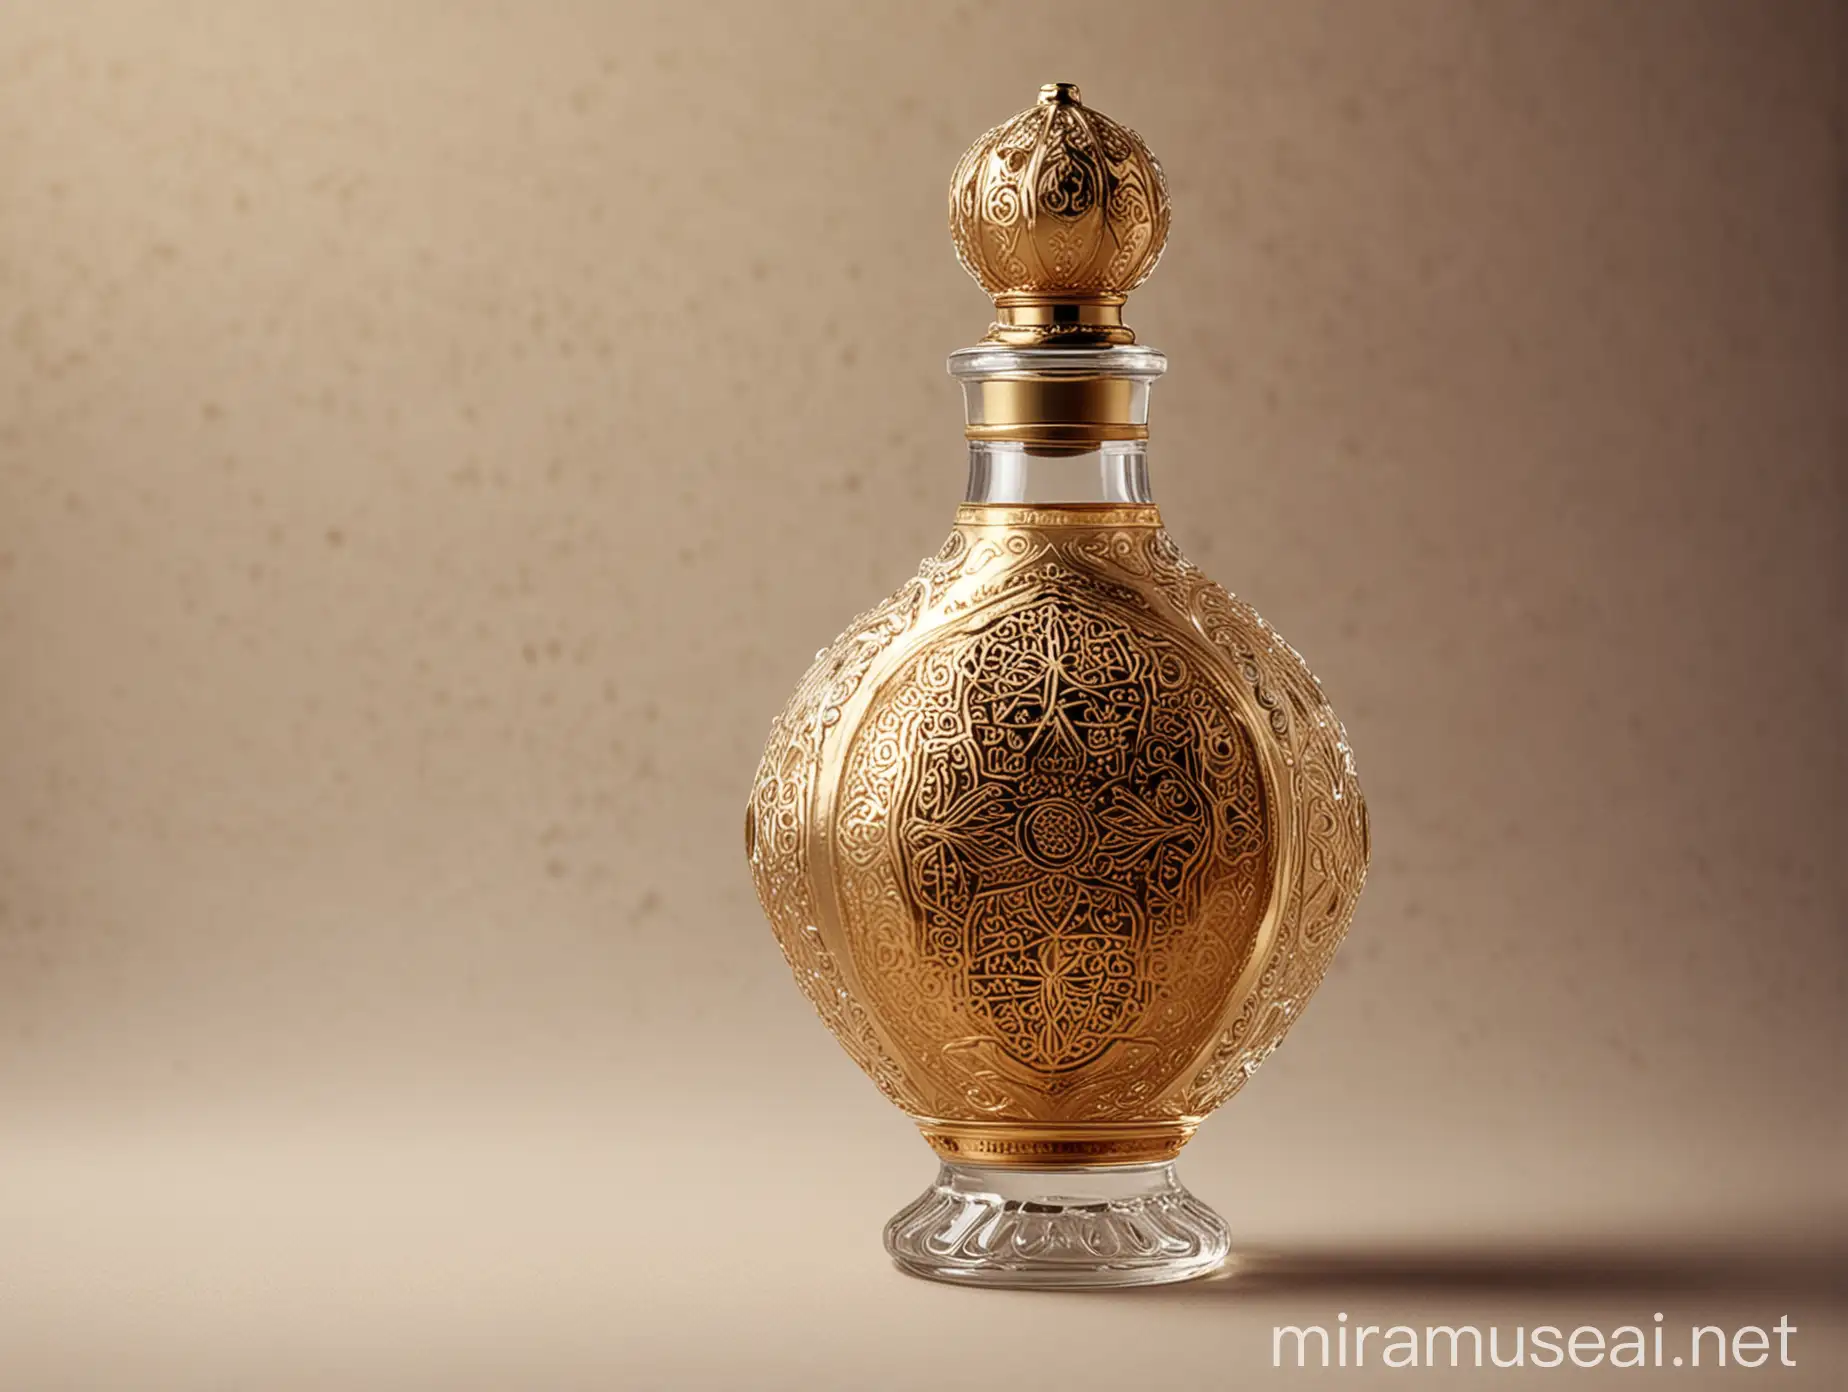 Arabic Perfume Bottle with Ornate Gold Filigree Design